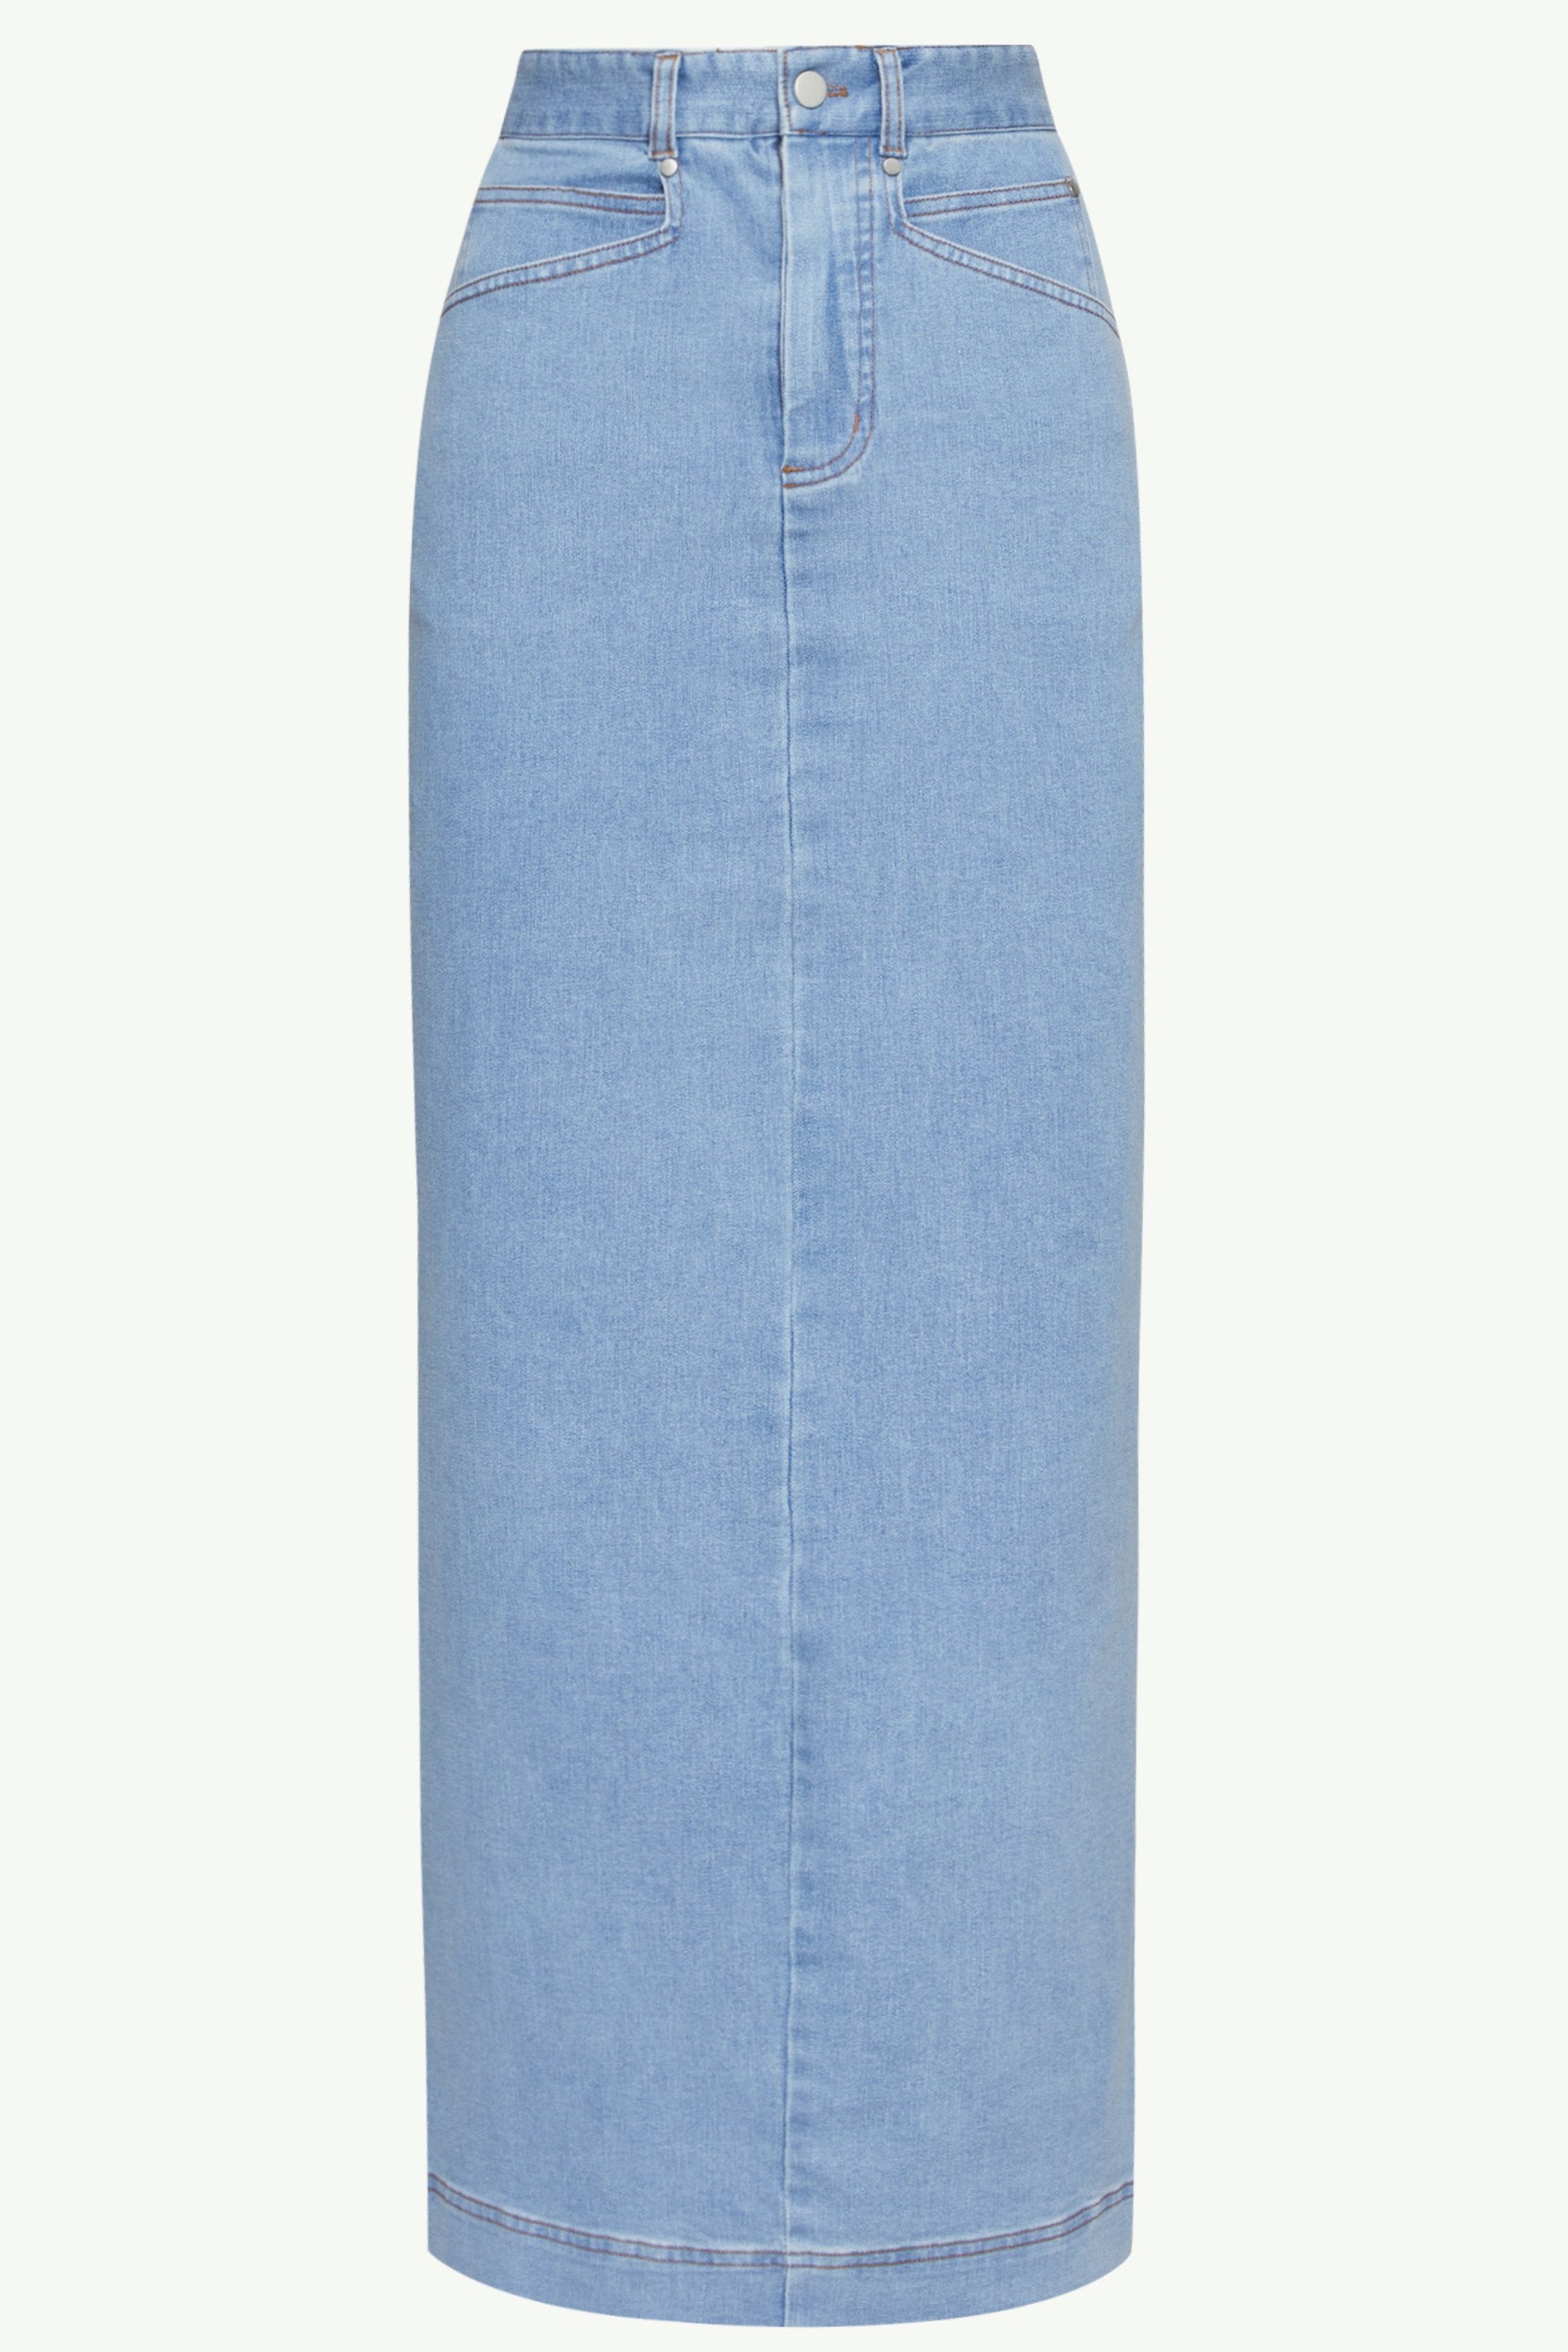 Denim Maxi Skirt - Light Wash Clothing Veiled 